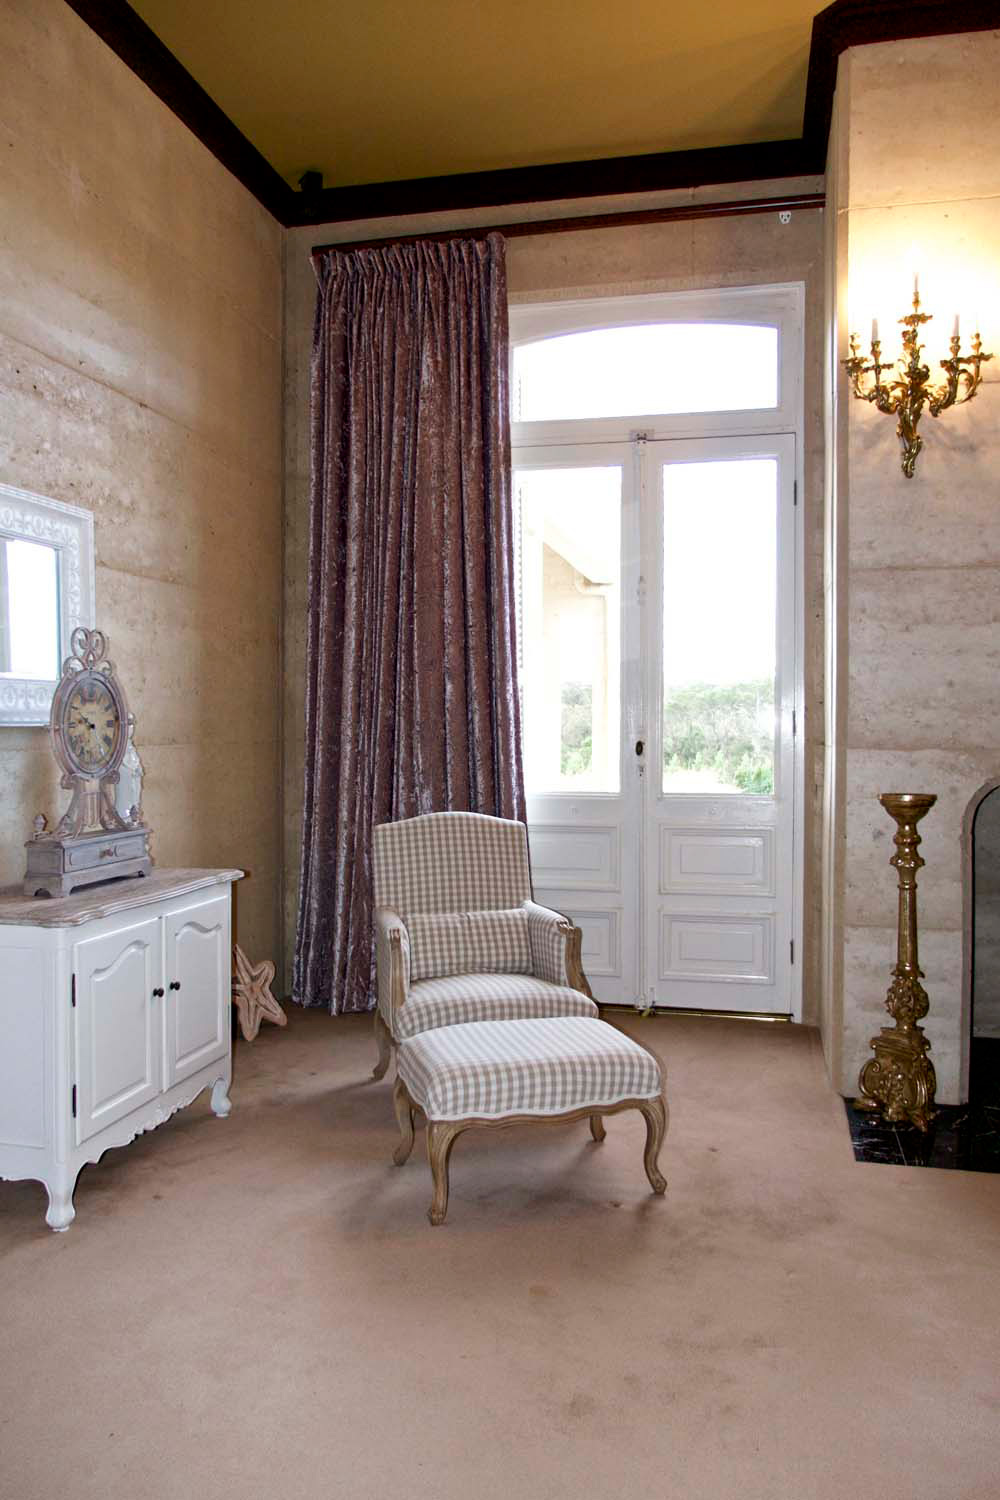 3 French Manor interiors